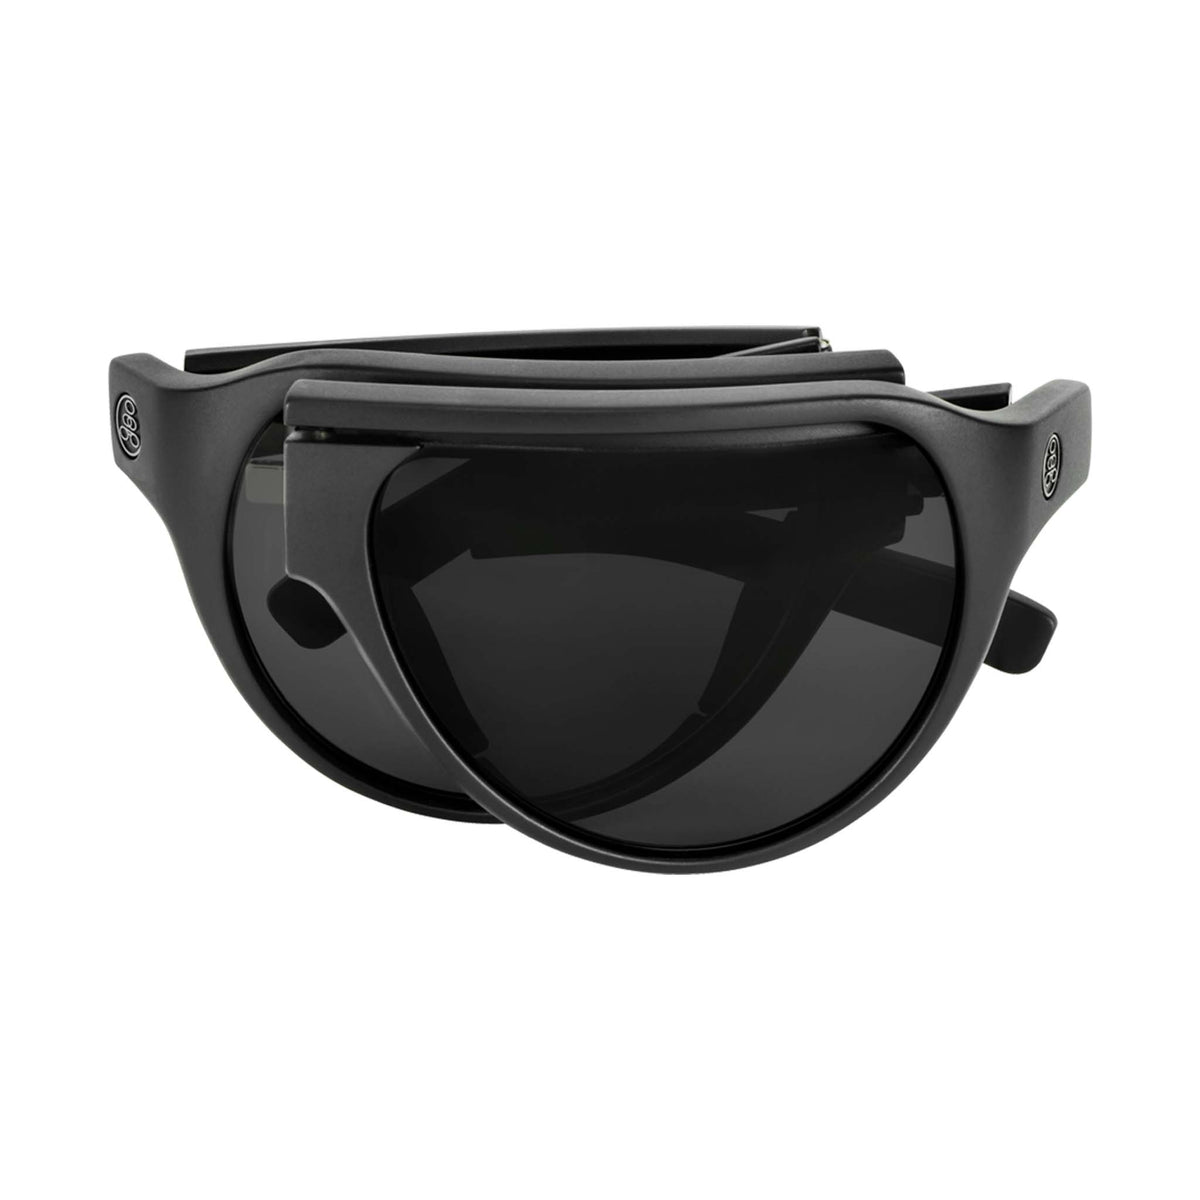 Popticals, Premium Compact Sunglasses, PopAir, 300010-BMGP, Polarized Sunglasses, Matte Black Frame, Gray Lenses, Compact View